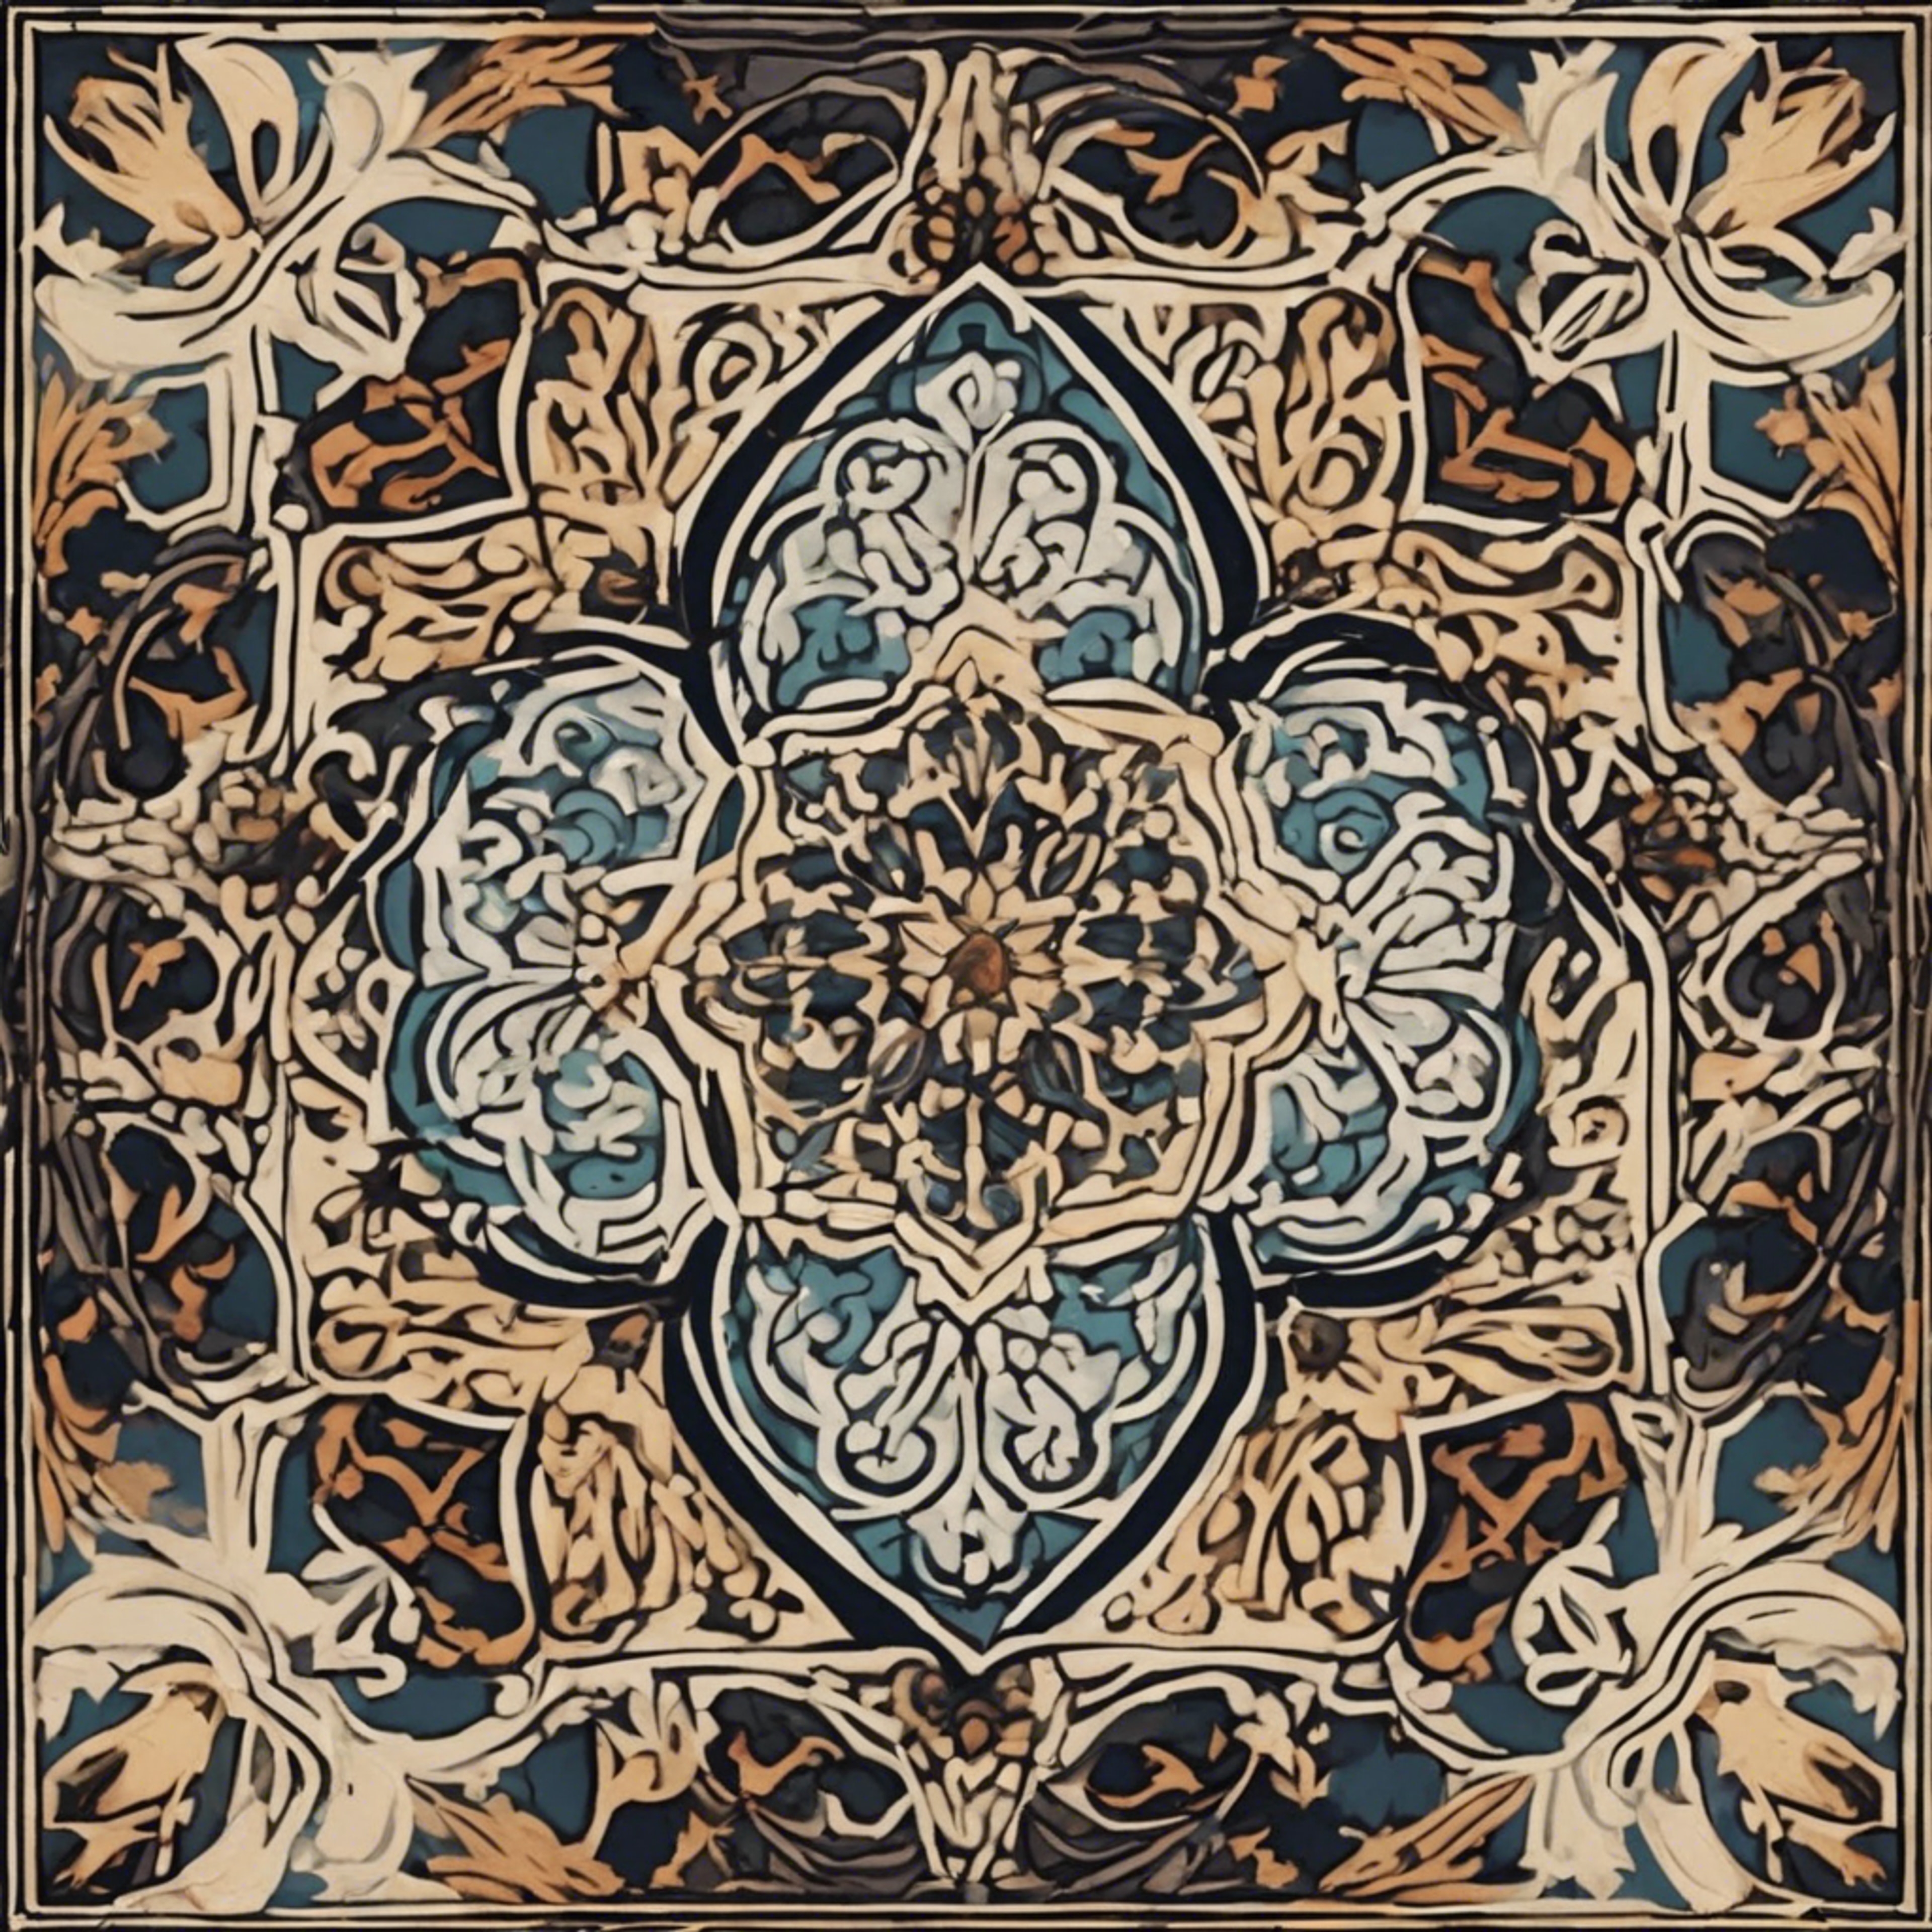 A Moroccan tile pattern with dark floral motifs.壁紙[441d3e519e3843769042]